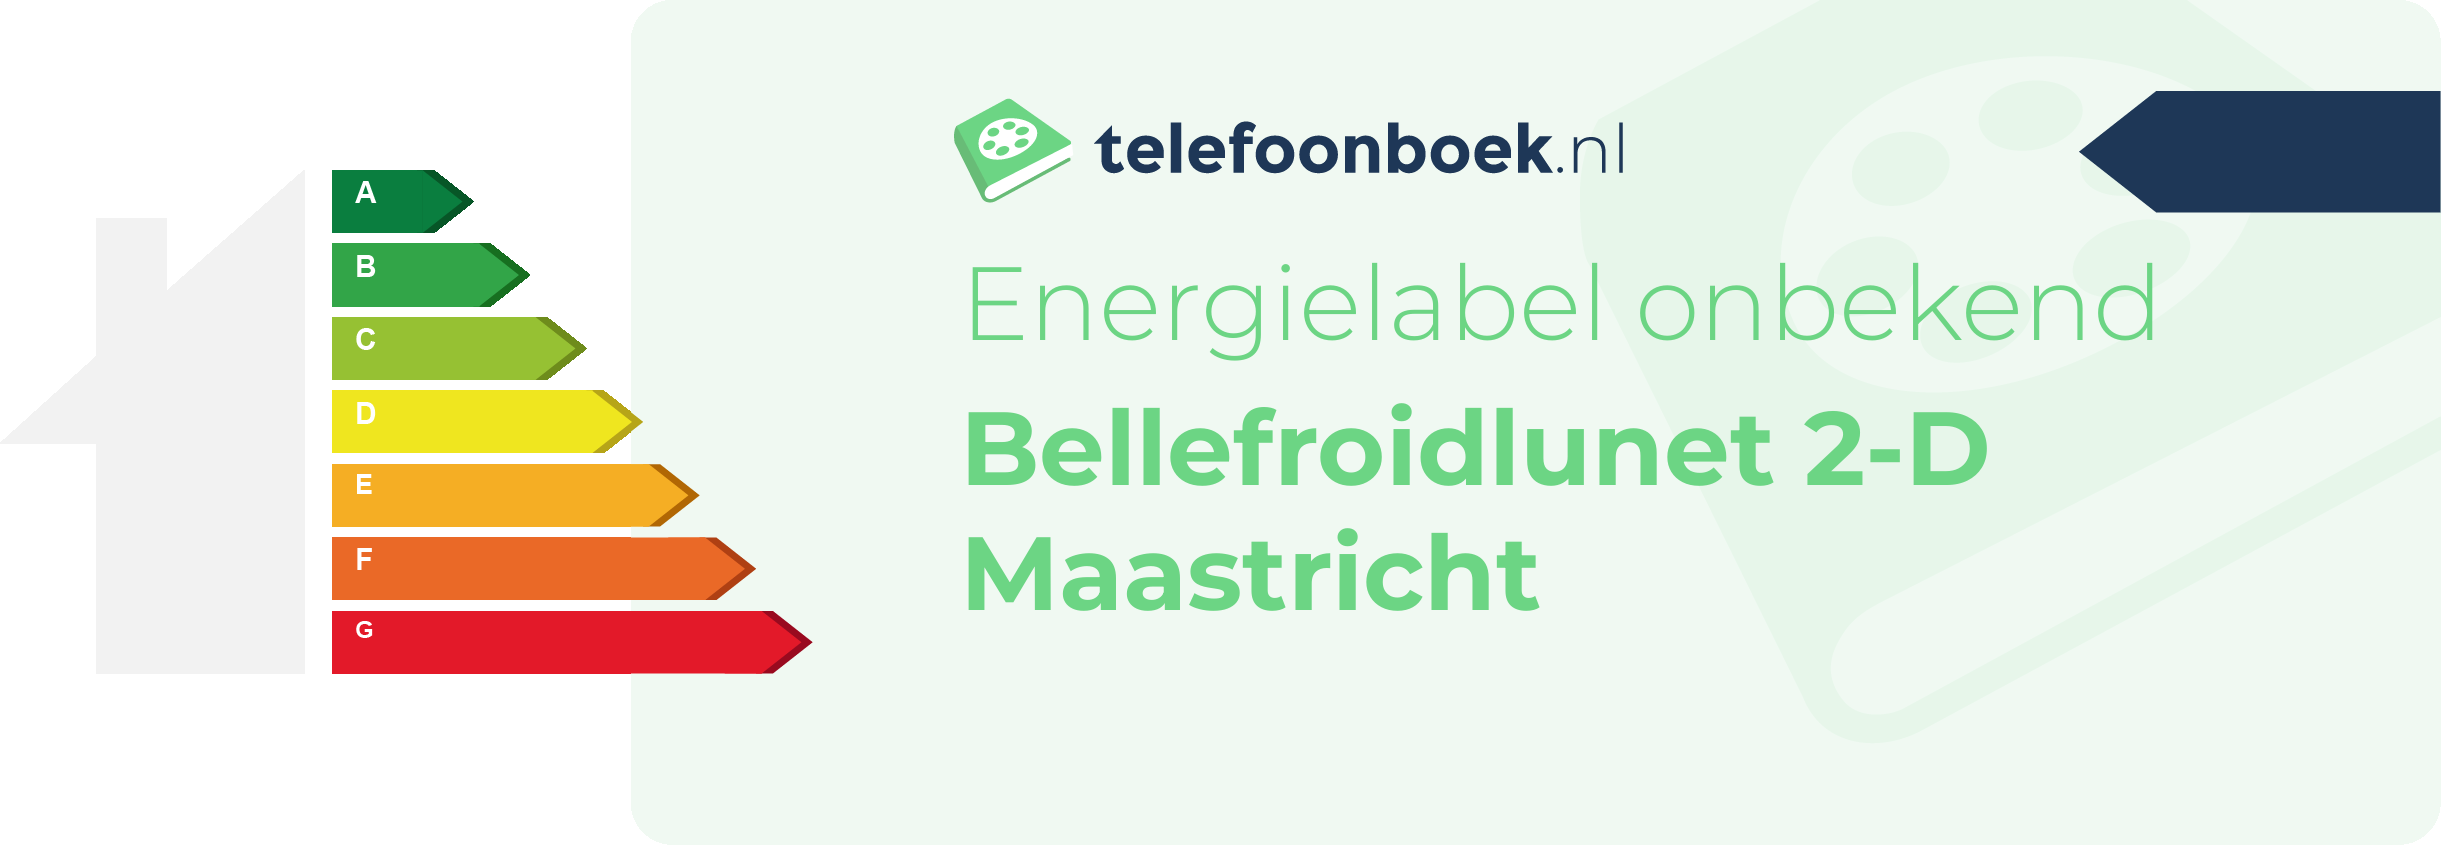 Energielabel Bellefroidlunet 2-D Maastricht